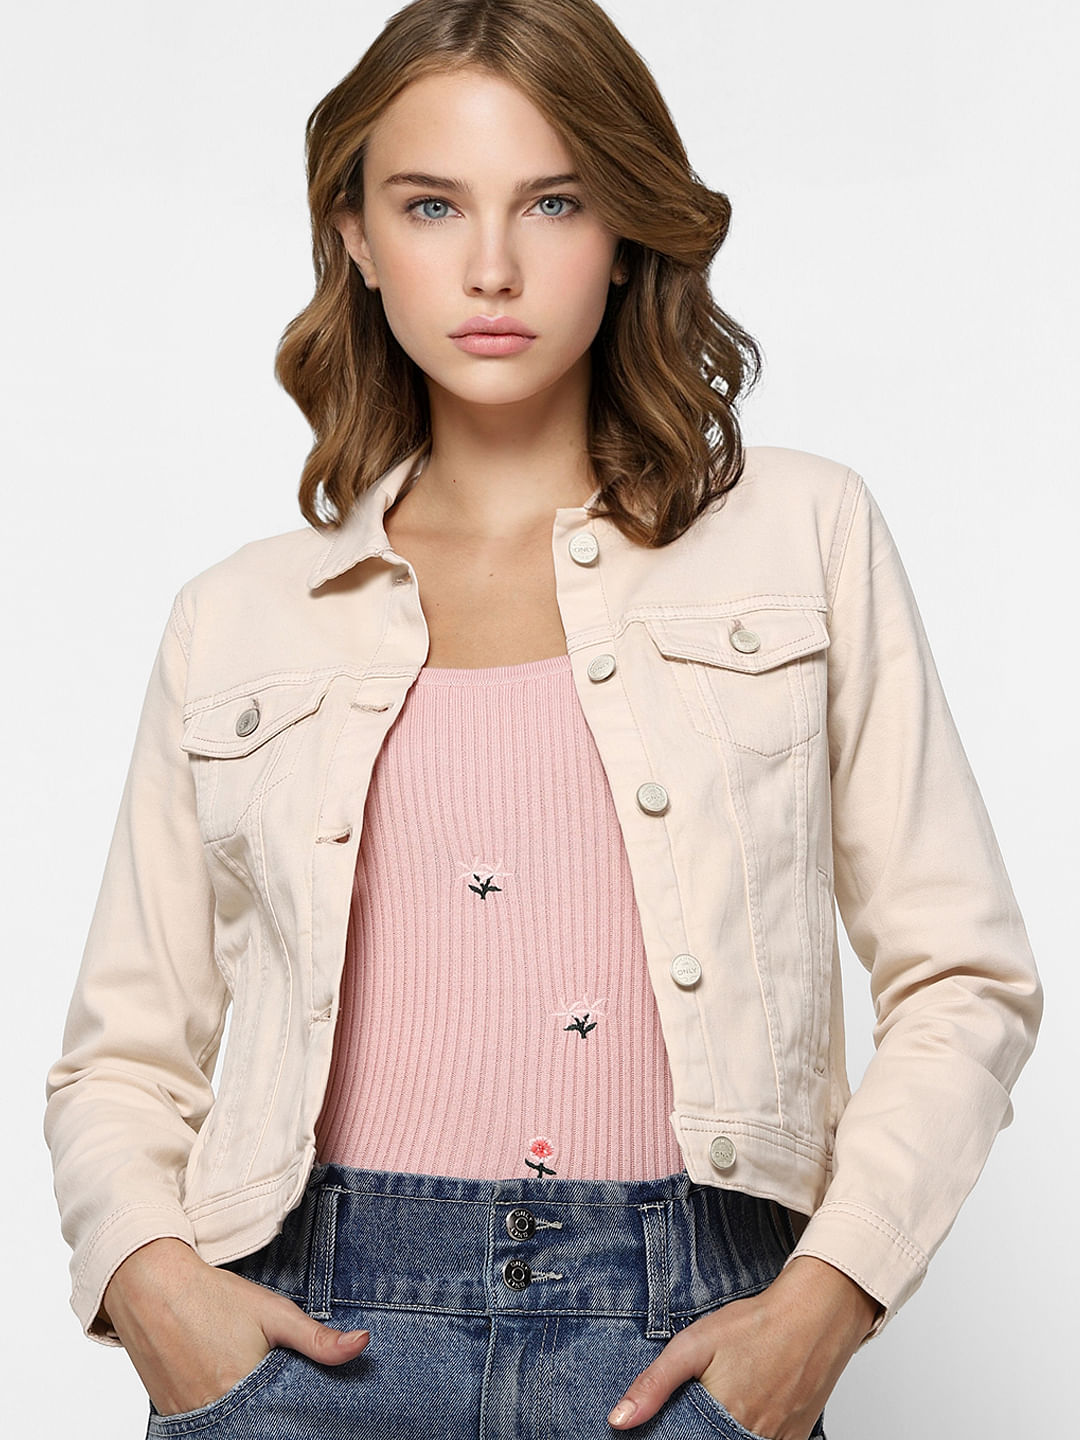 Judy Blue Long Crop Denim Jacket in Hot Pink - Boujee Boutique